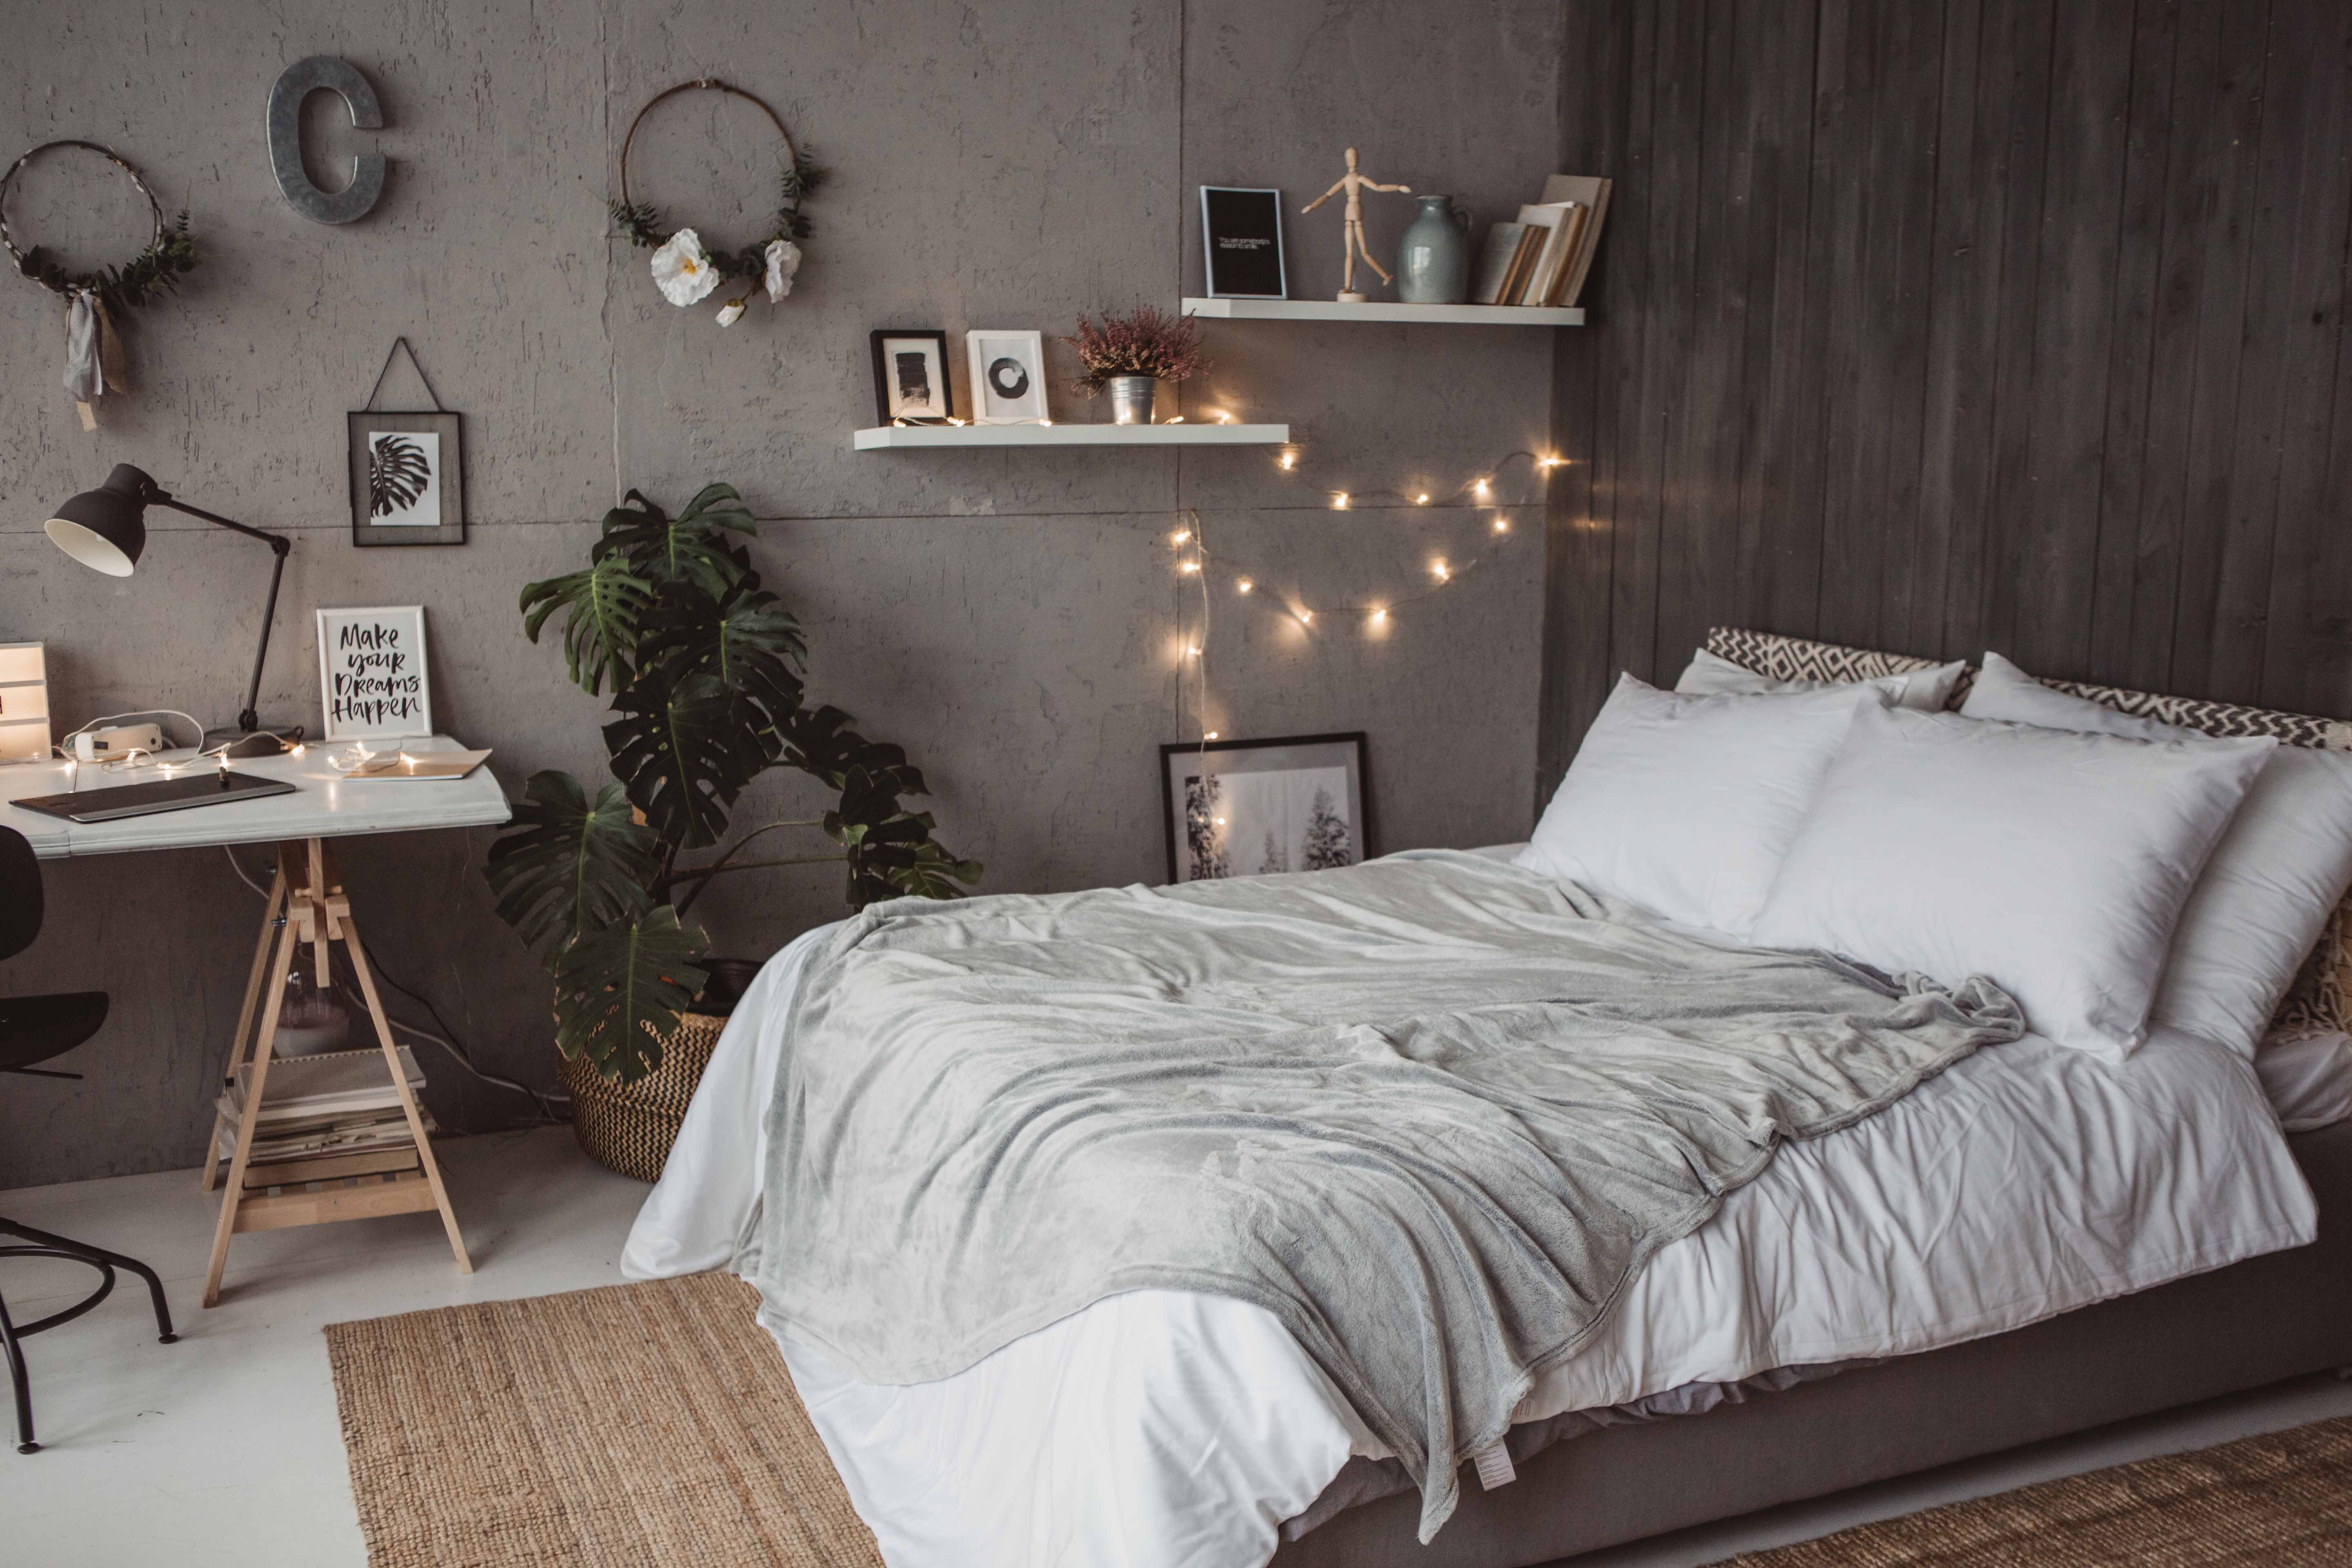 Mooi opgemaakt bed en knusse slaapkamer